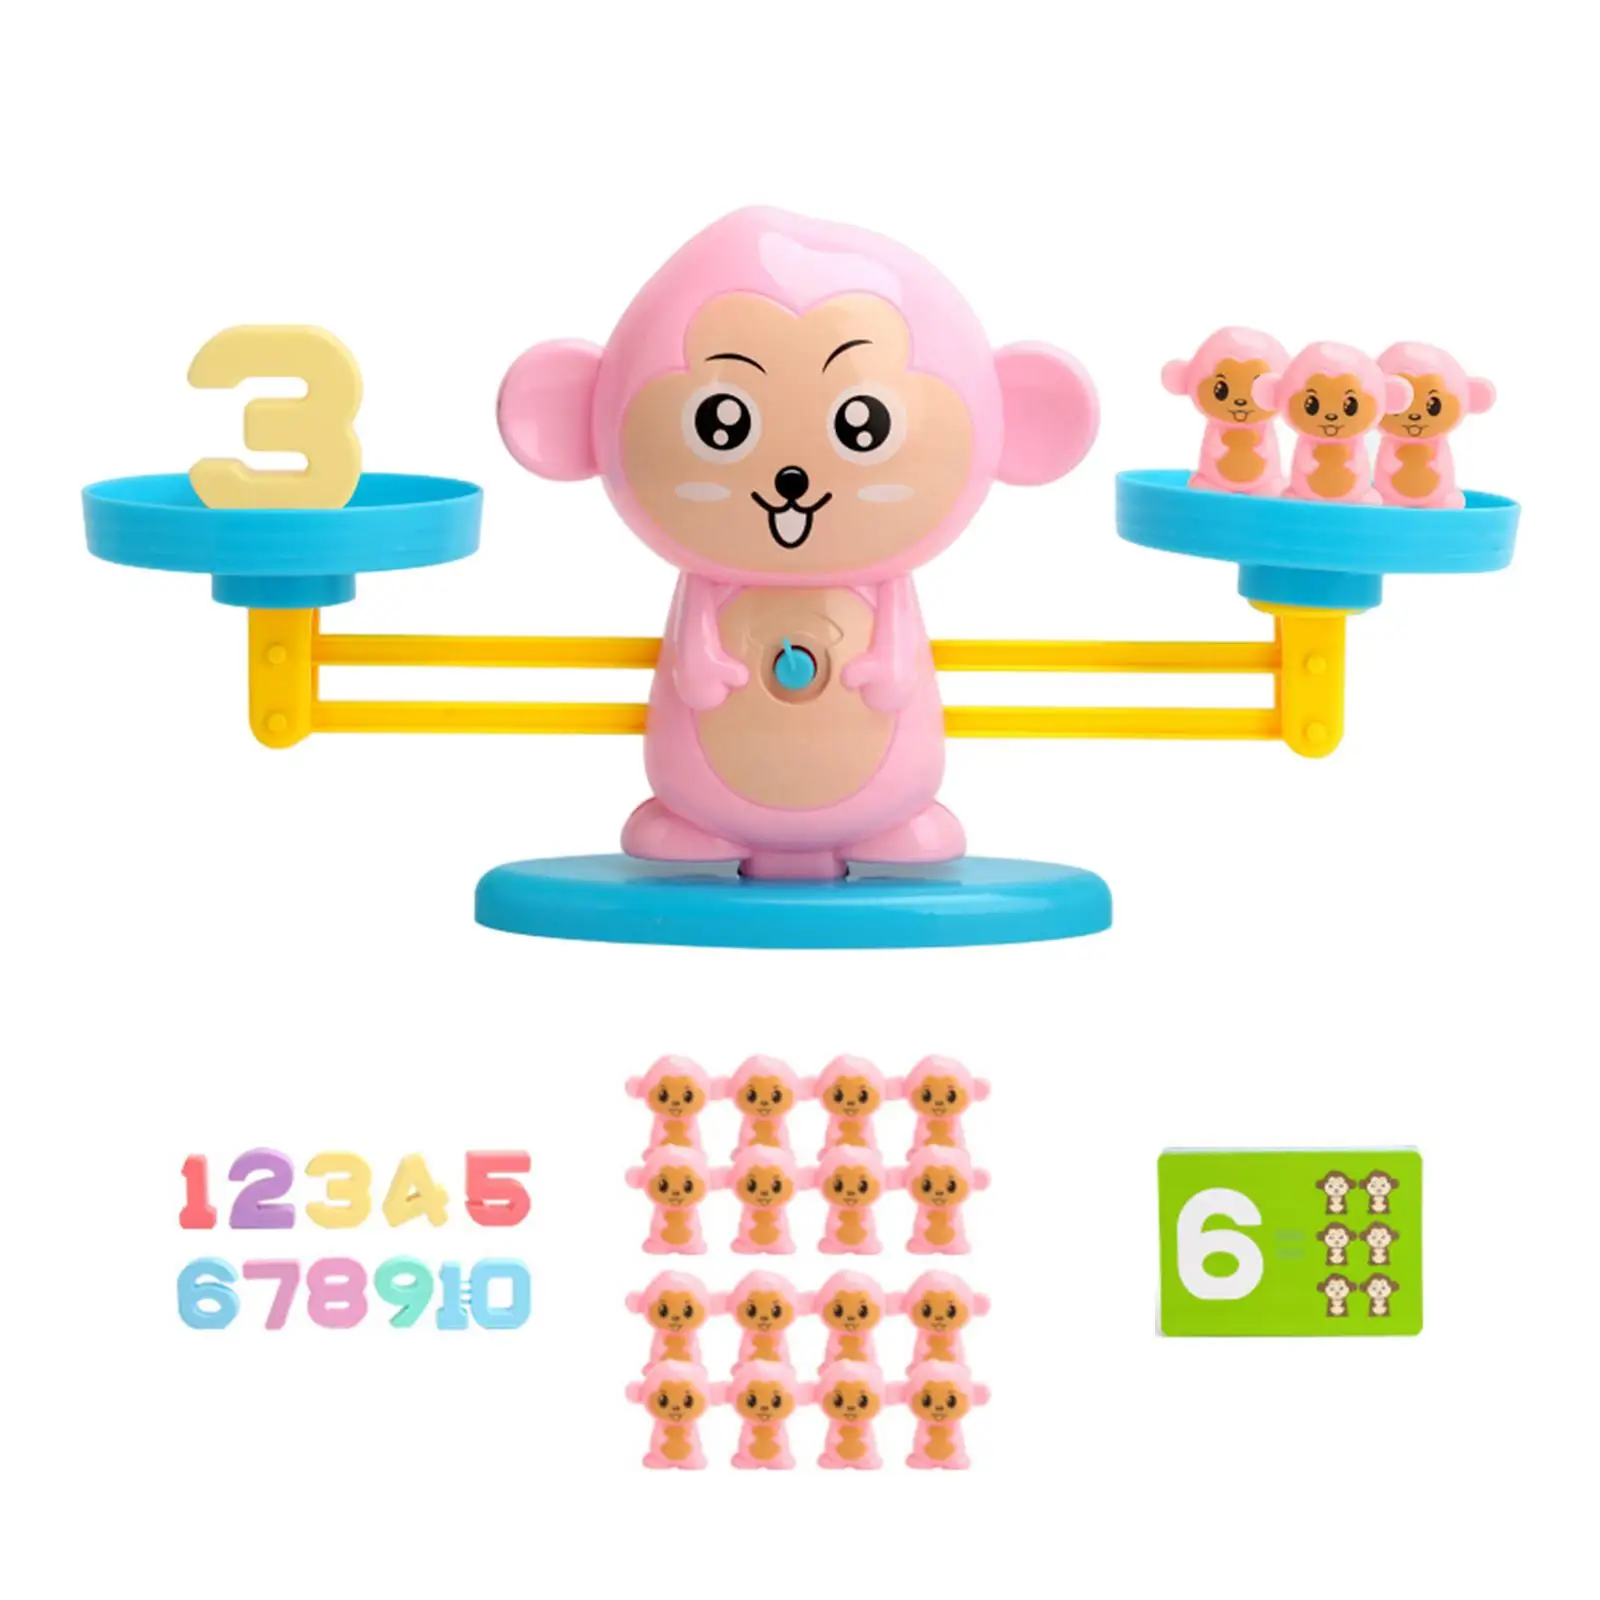 Balance Math Game Balance Scales Balance Game Toy 3 4 5 Year Olds